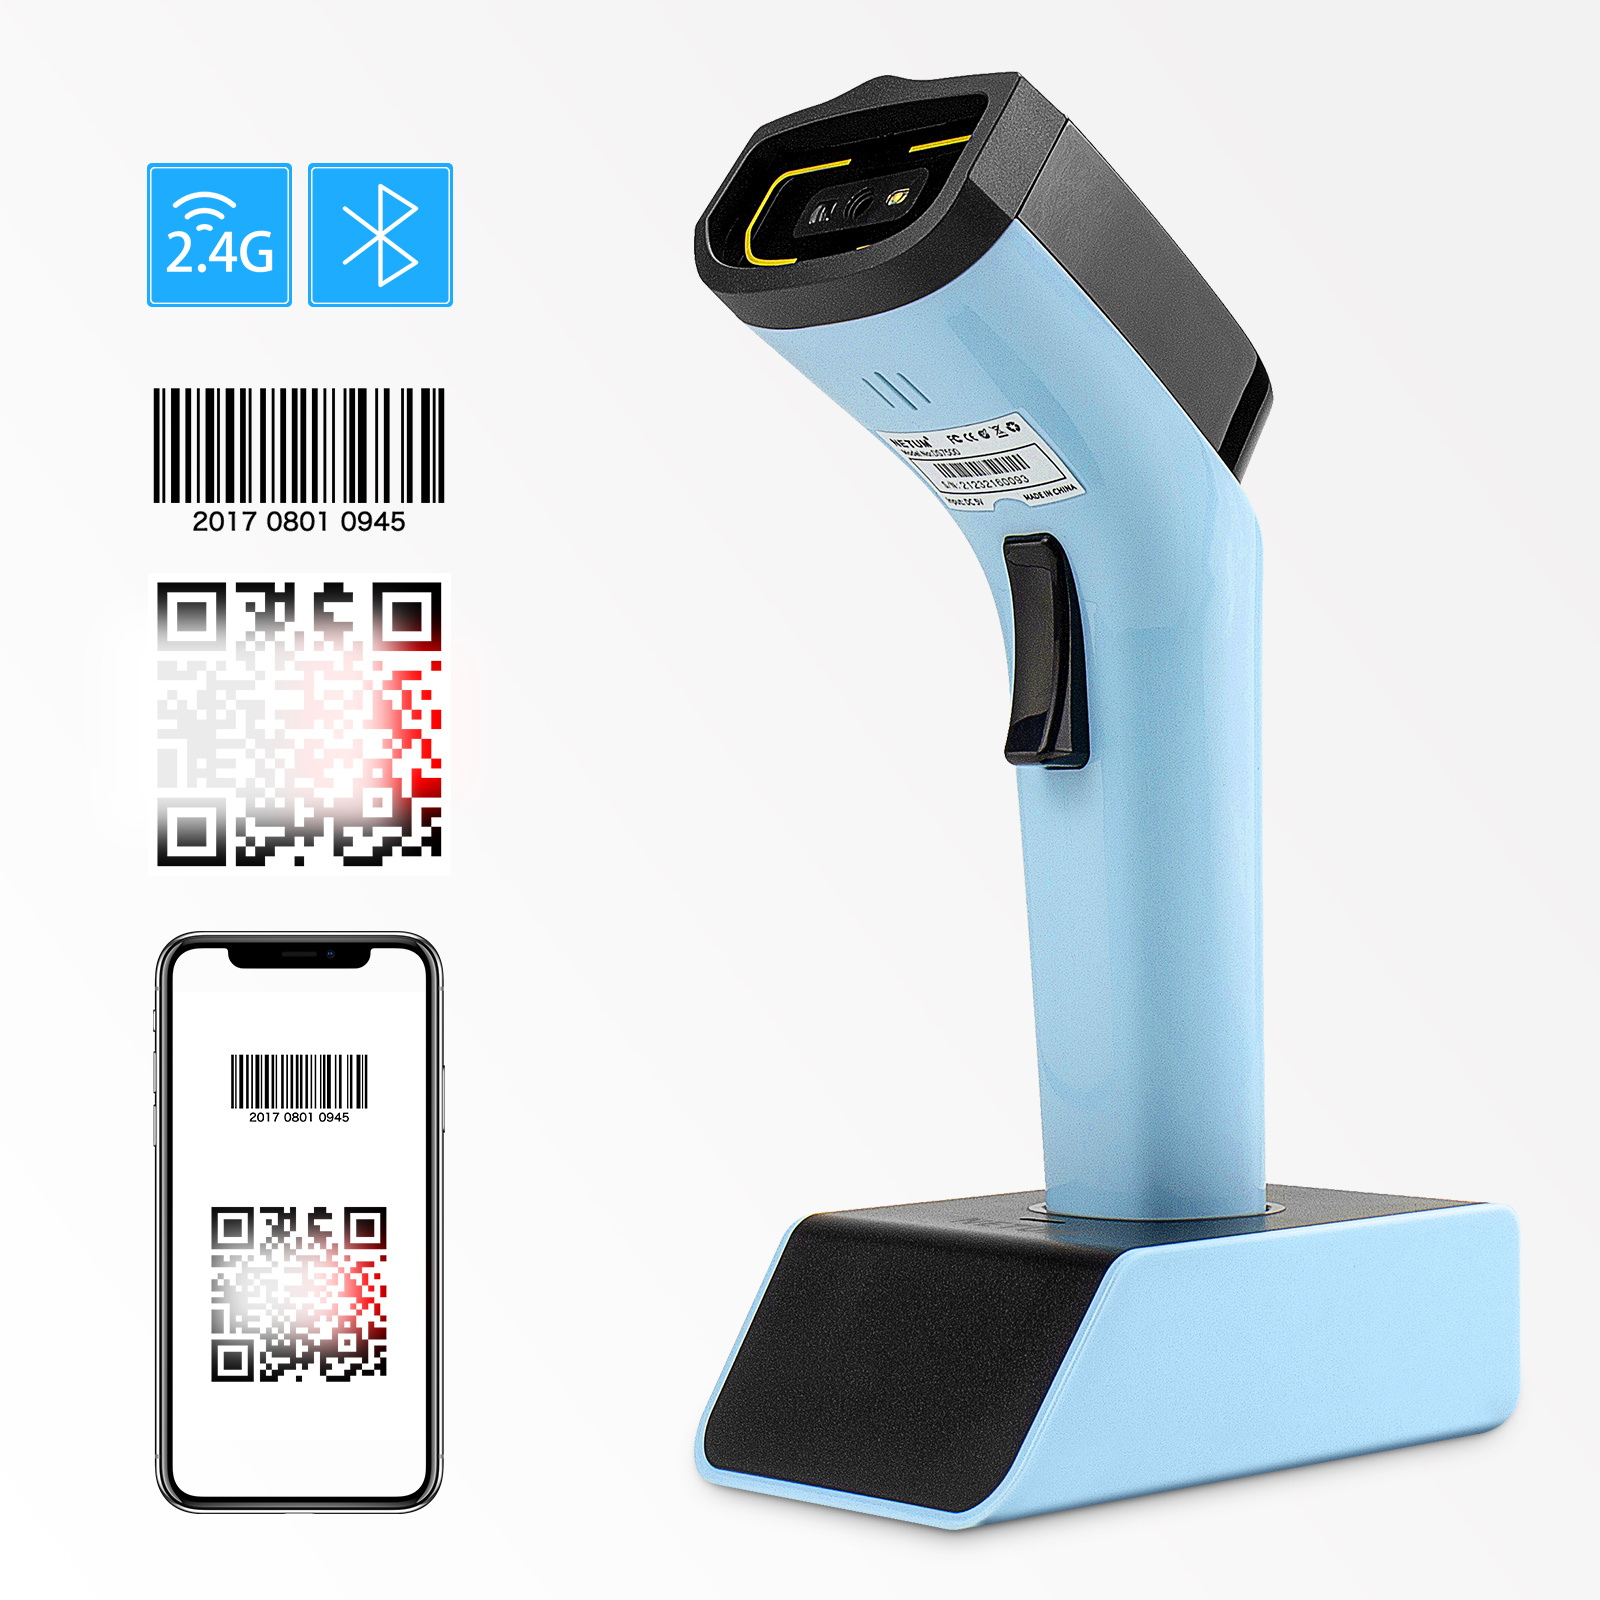 Supply NETUM DS7500 2D Bluetooth Barcode Scanner, Hands Free 